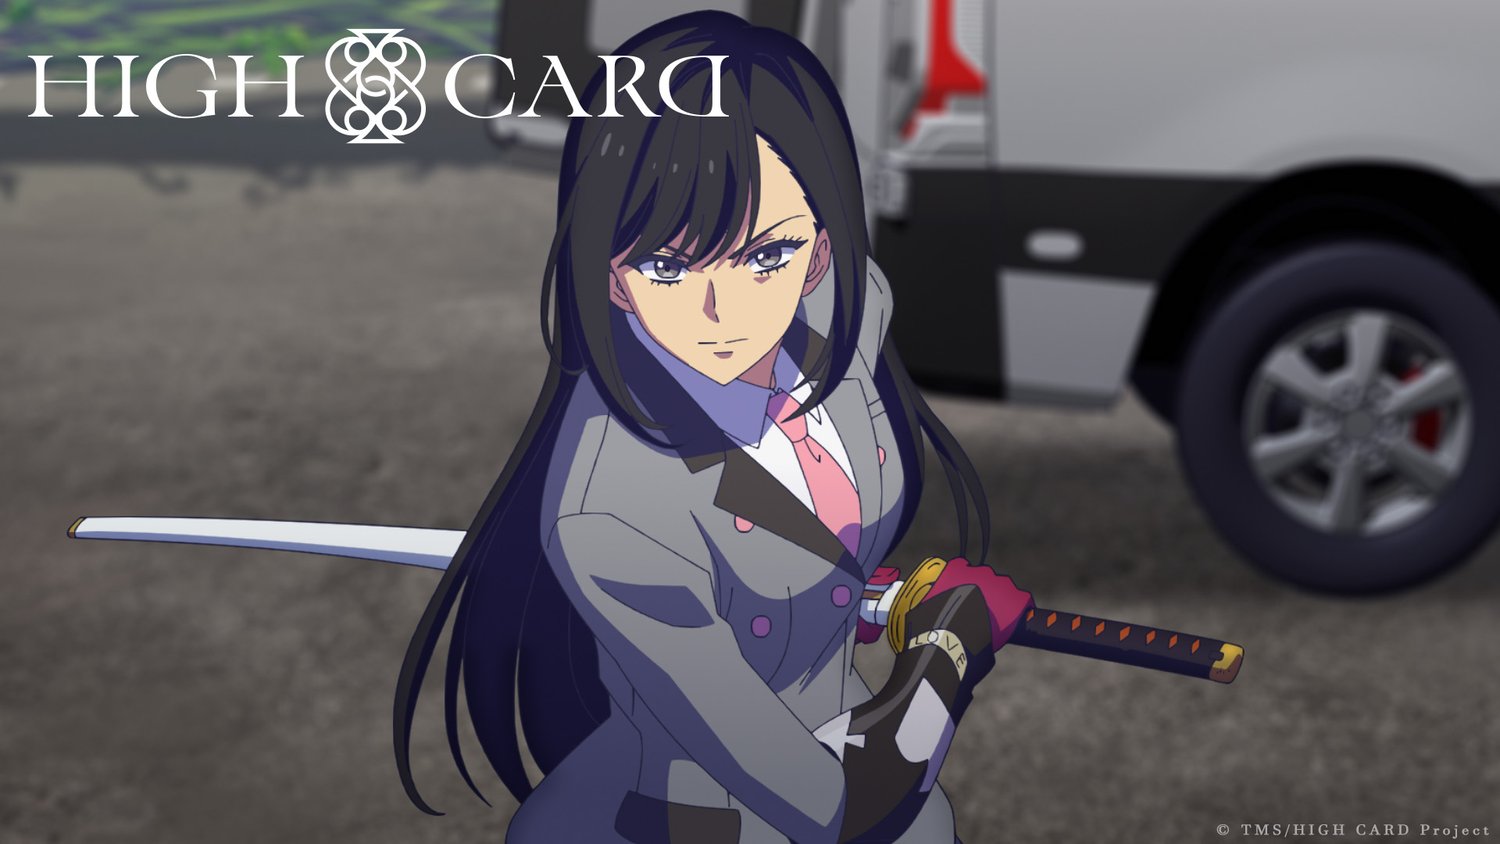 Once She Draws Her Sword She Goes Berserk, high card anime